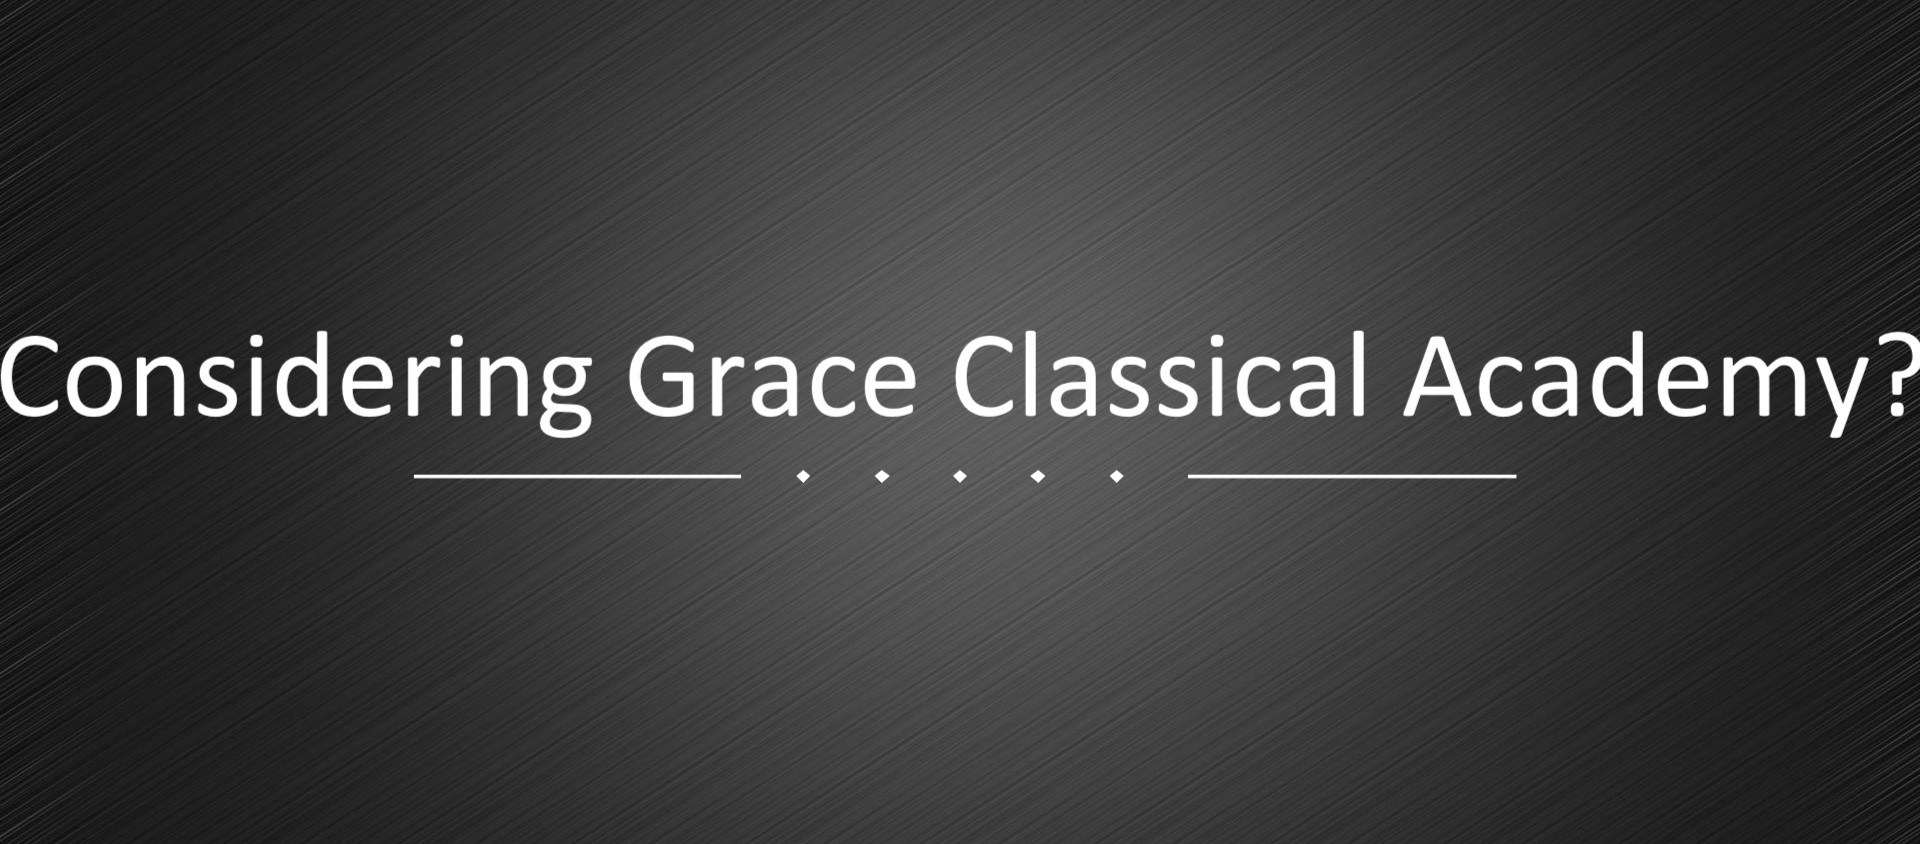 Considering Grace Classical Academy - Grace Classical Academy